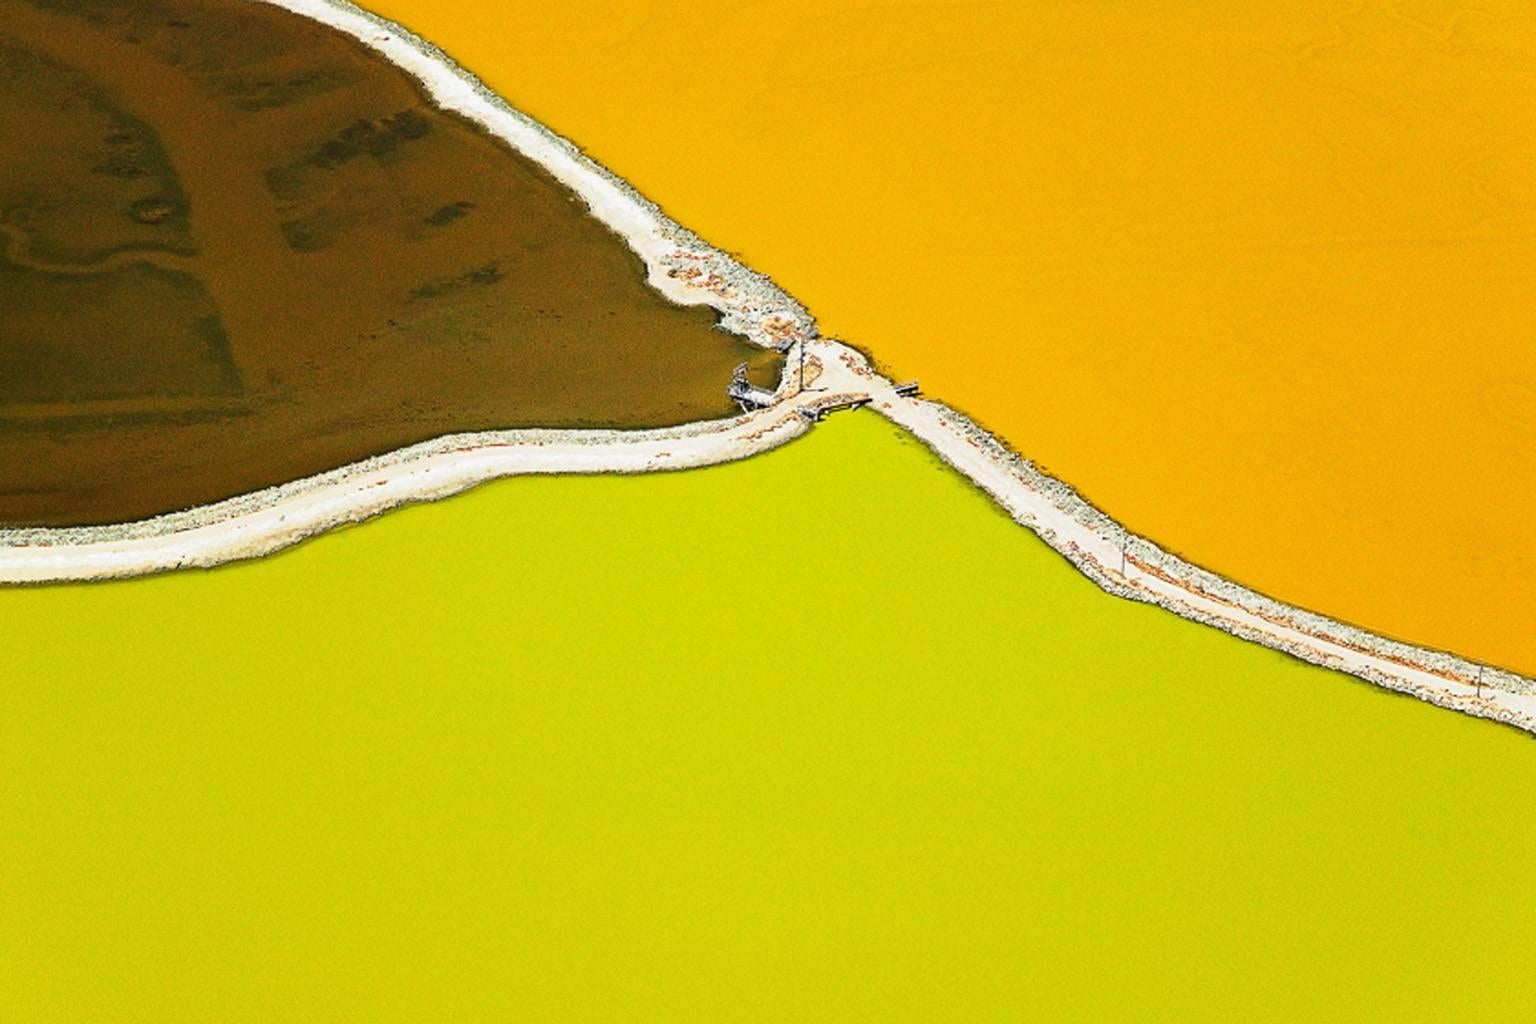 Colin McRae Abstract Photograph - Lime Orange